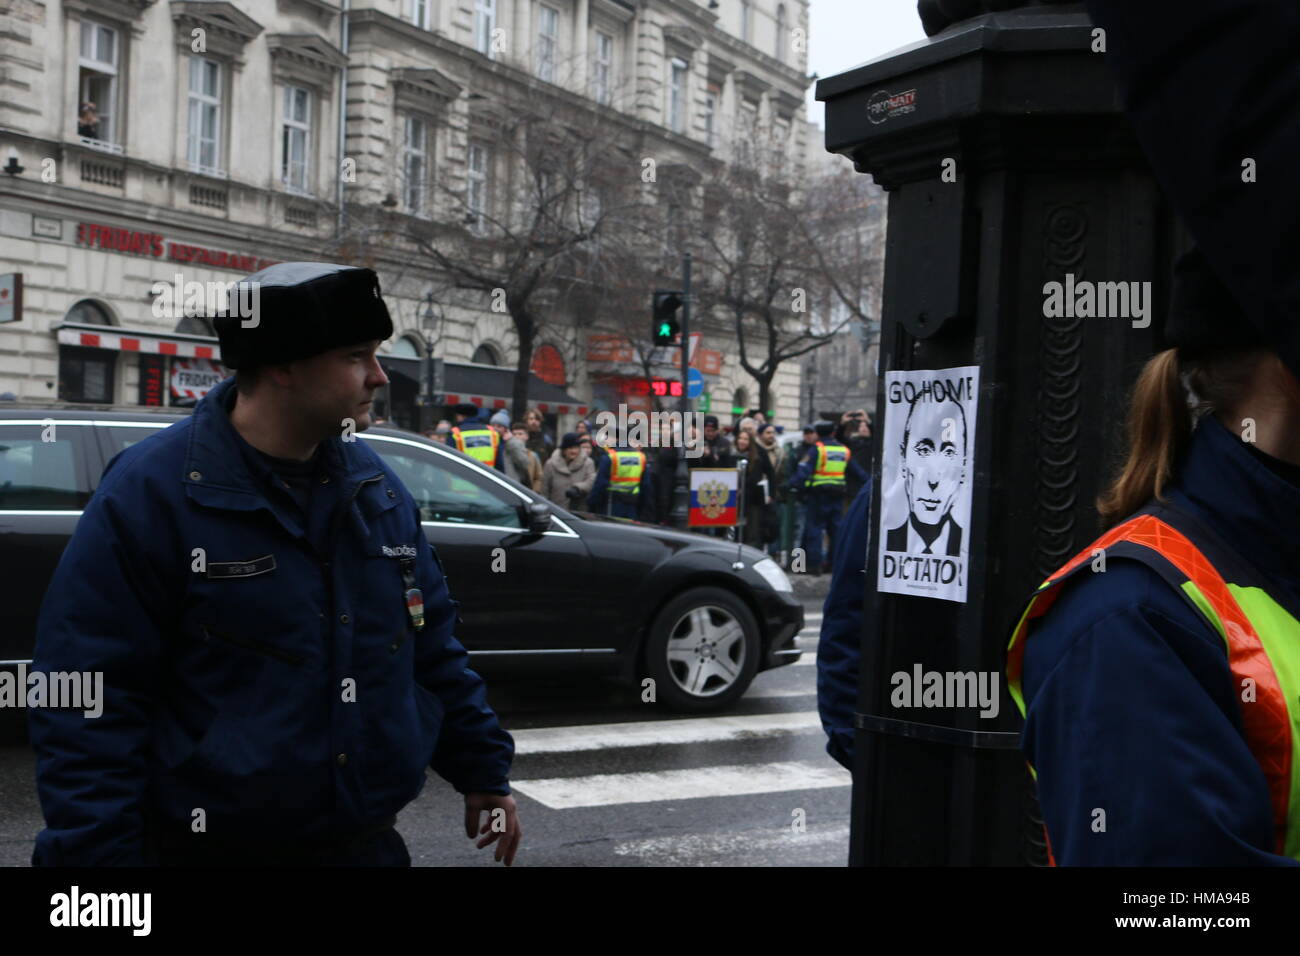 Putin's motorcade passes by an anti Putin poster in Budapest Credit: Conall Kearney/Alamy Live News Stock Photo